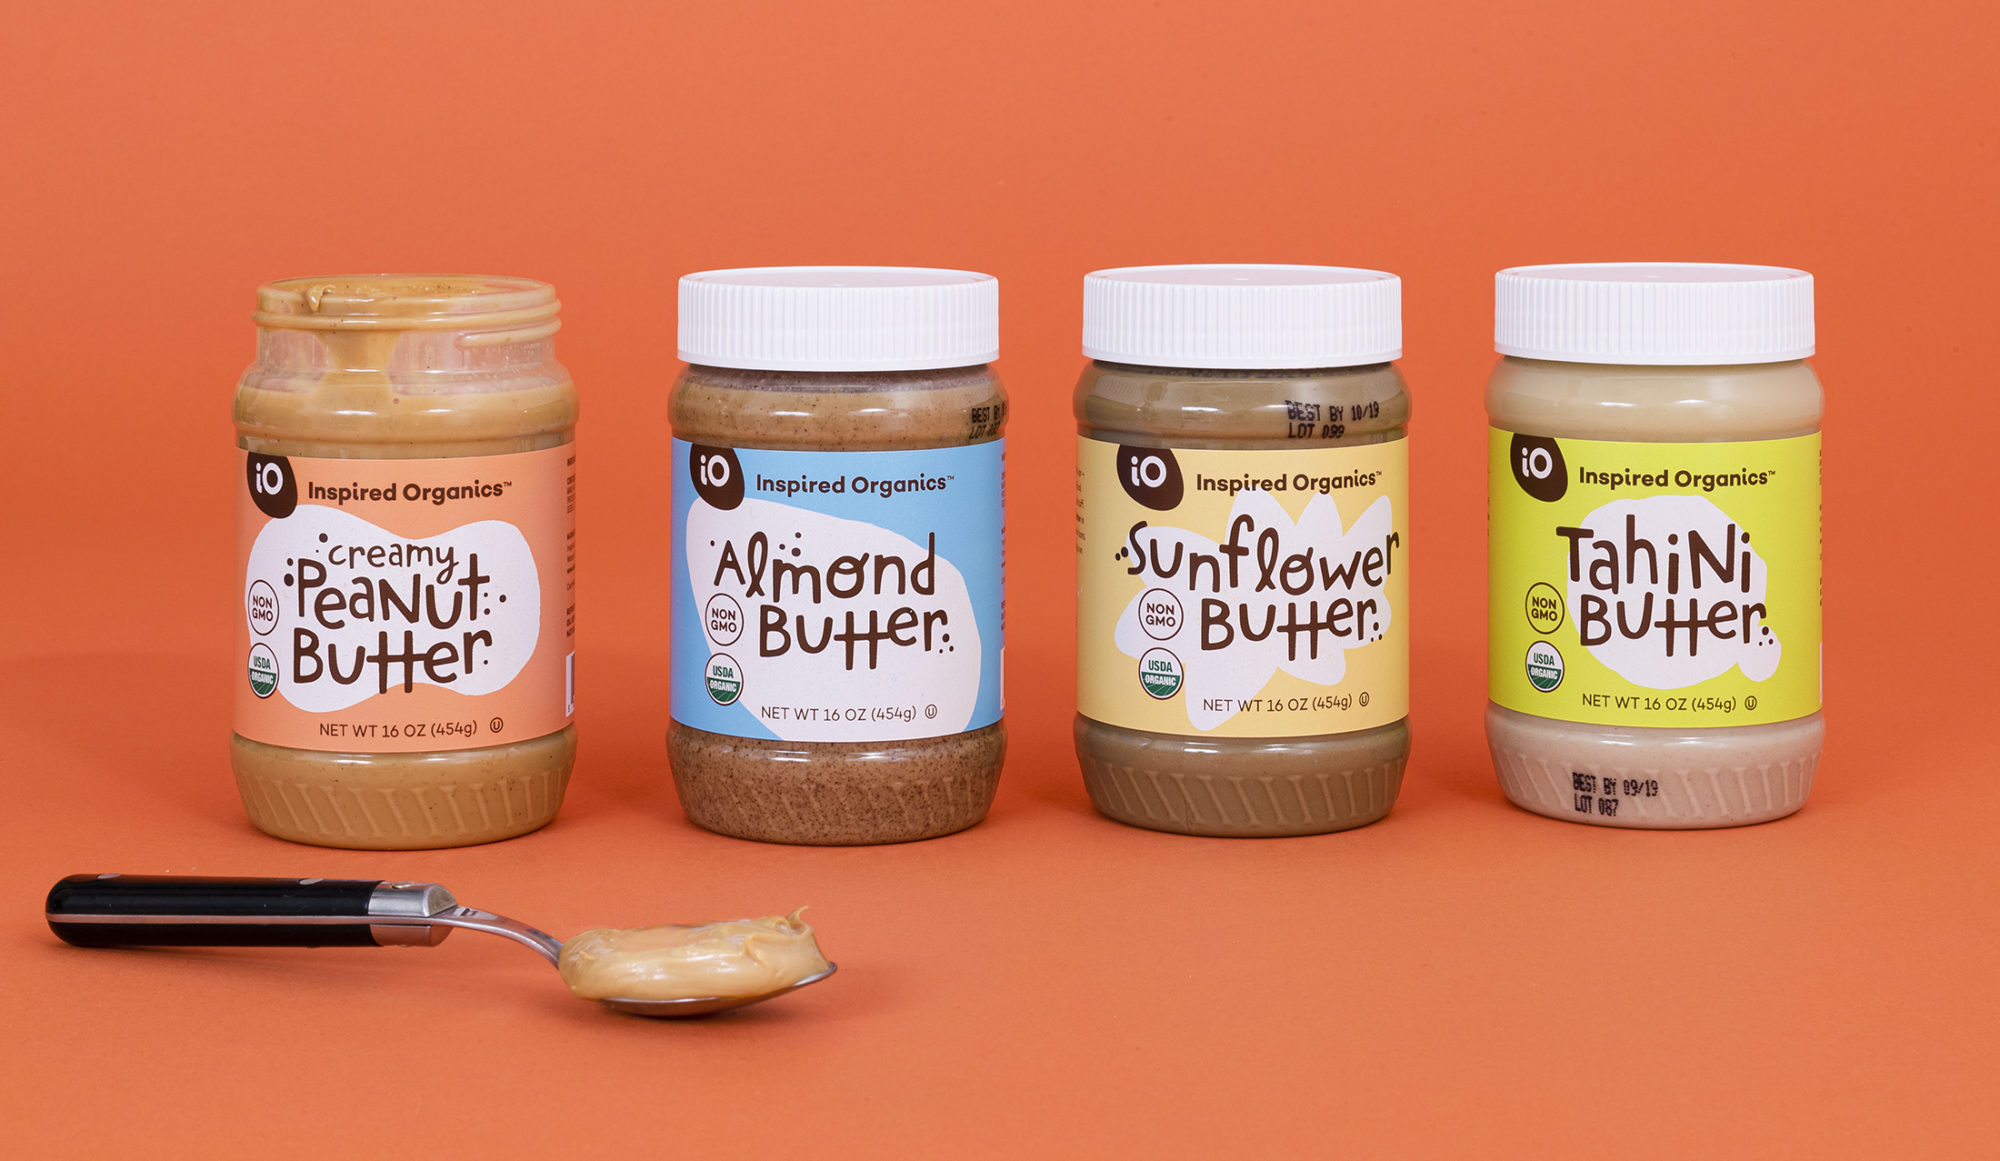 Inspired Organics Peanut Butter Packaging